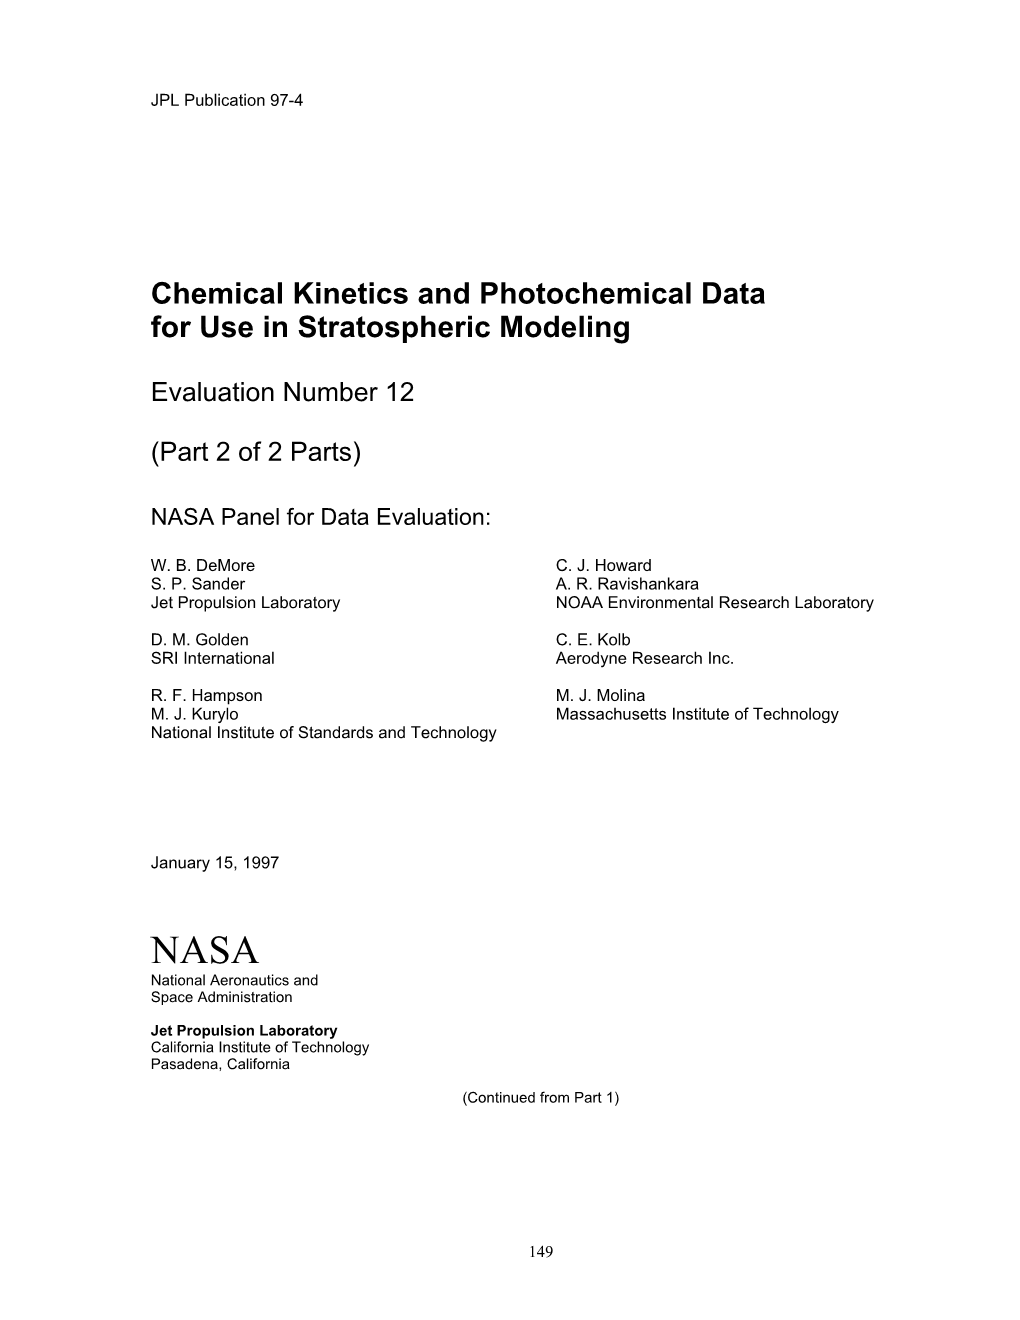 Chemical Kinetics and Photochemical Data